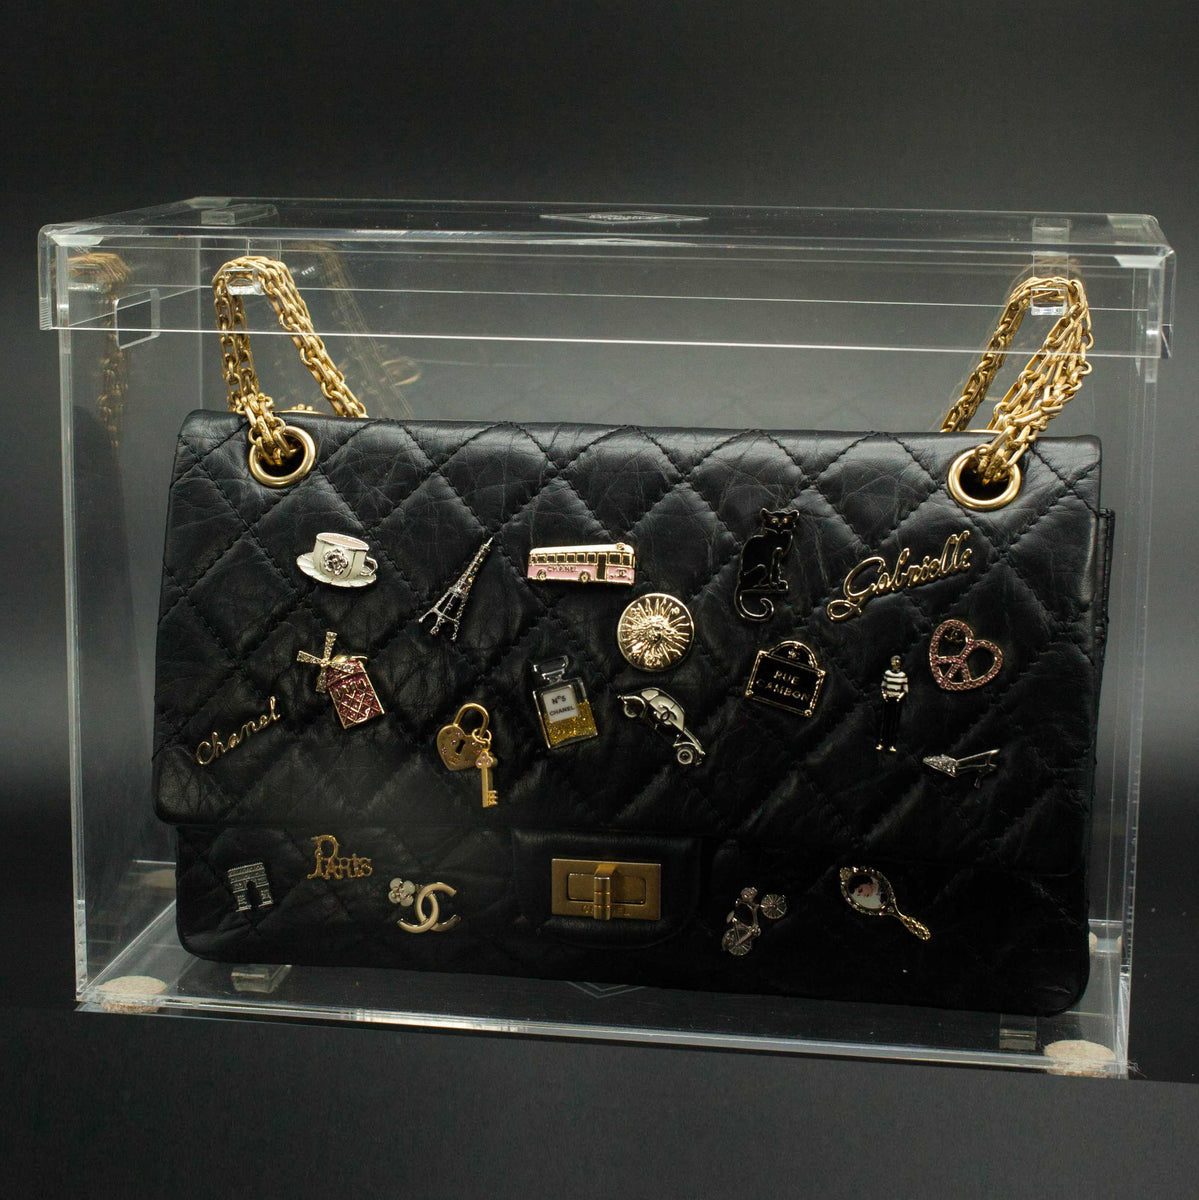 Chanel CC Delivery Bag - Rigid Handle Flap Bag ❤️